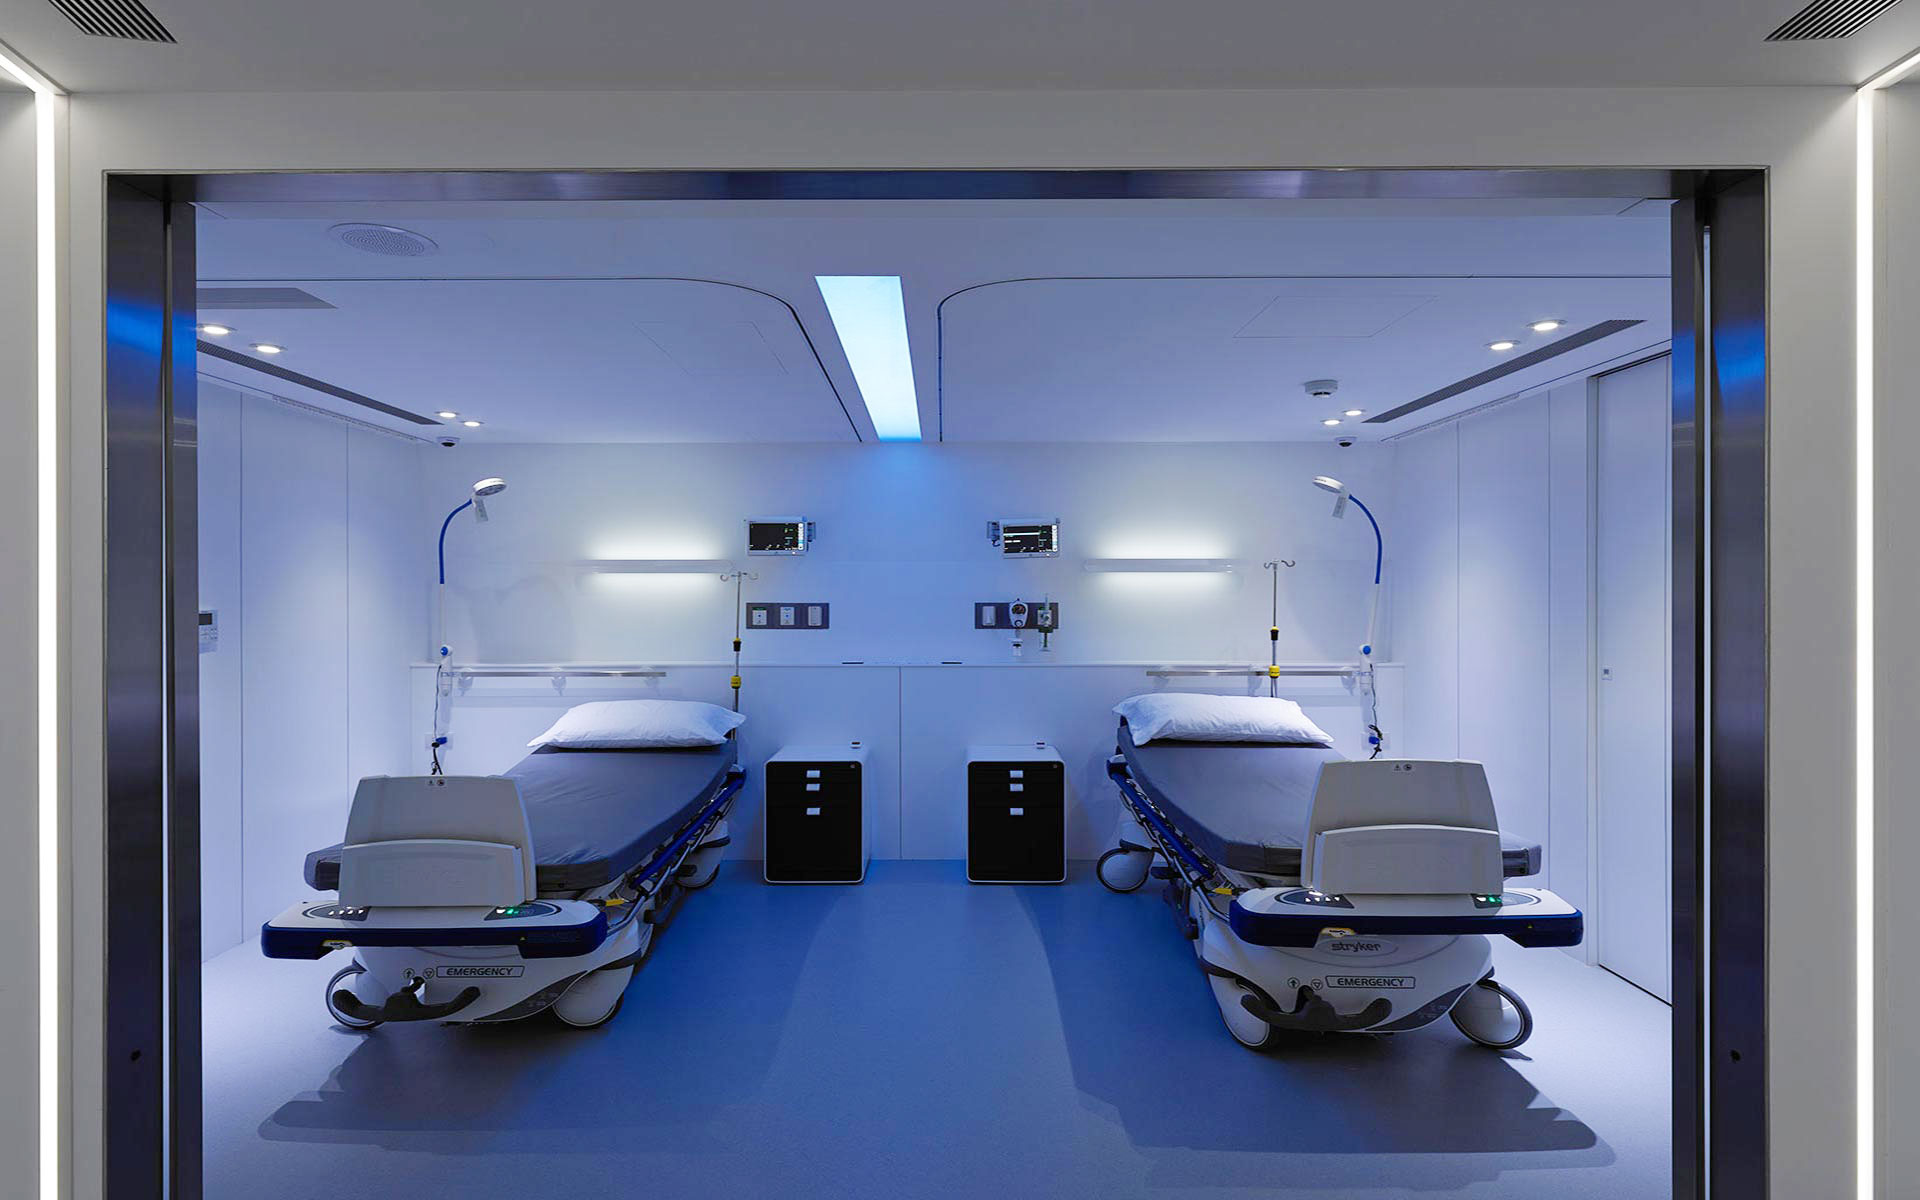 Sterilization chamber